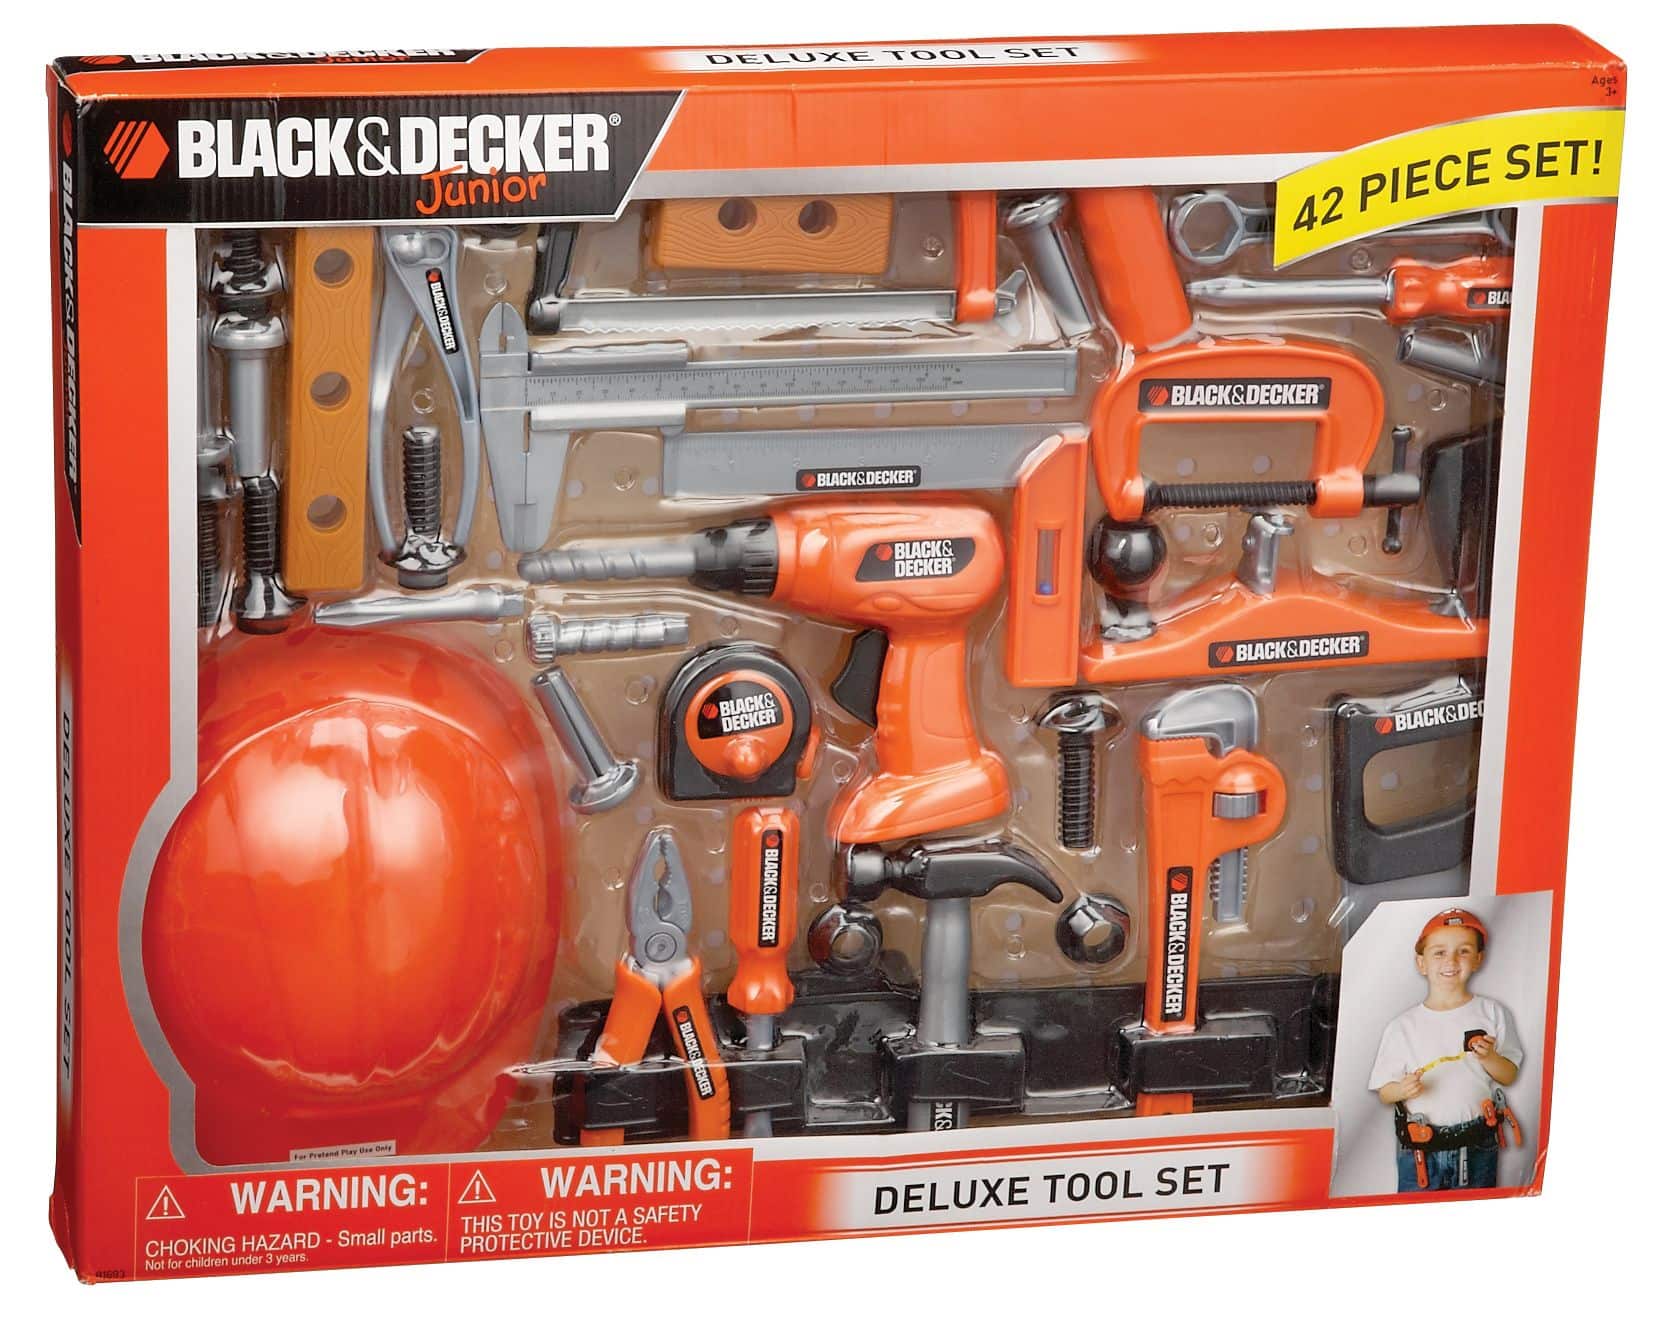 Black + Decker Kids Tool Set / 80 Piece / Pretend Play